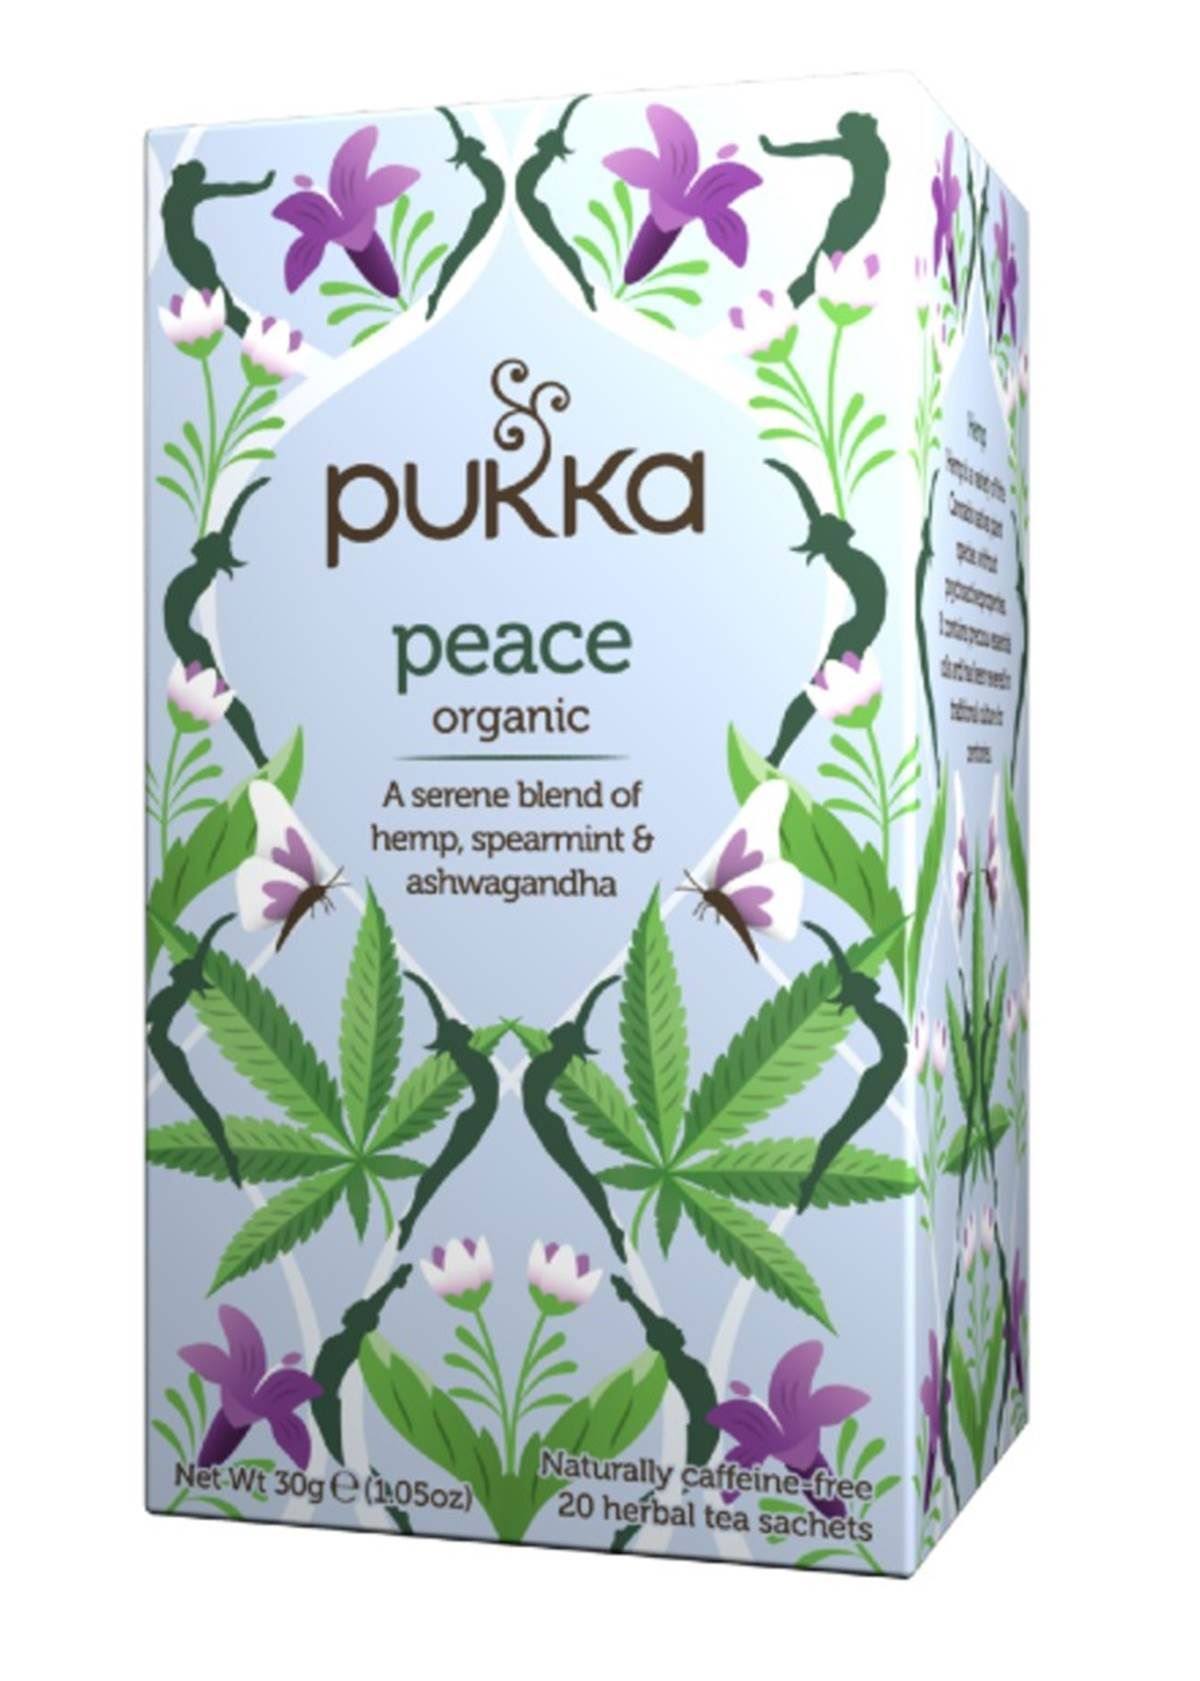 Pukka Organic Peace Herbal Tea - 30g, 20 Sachets